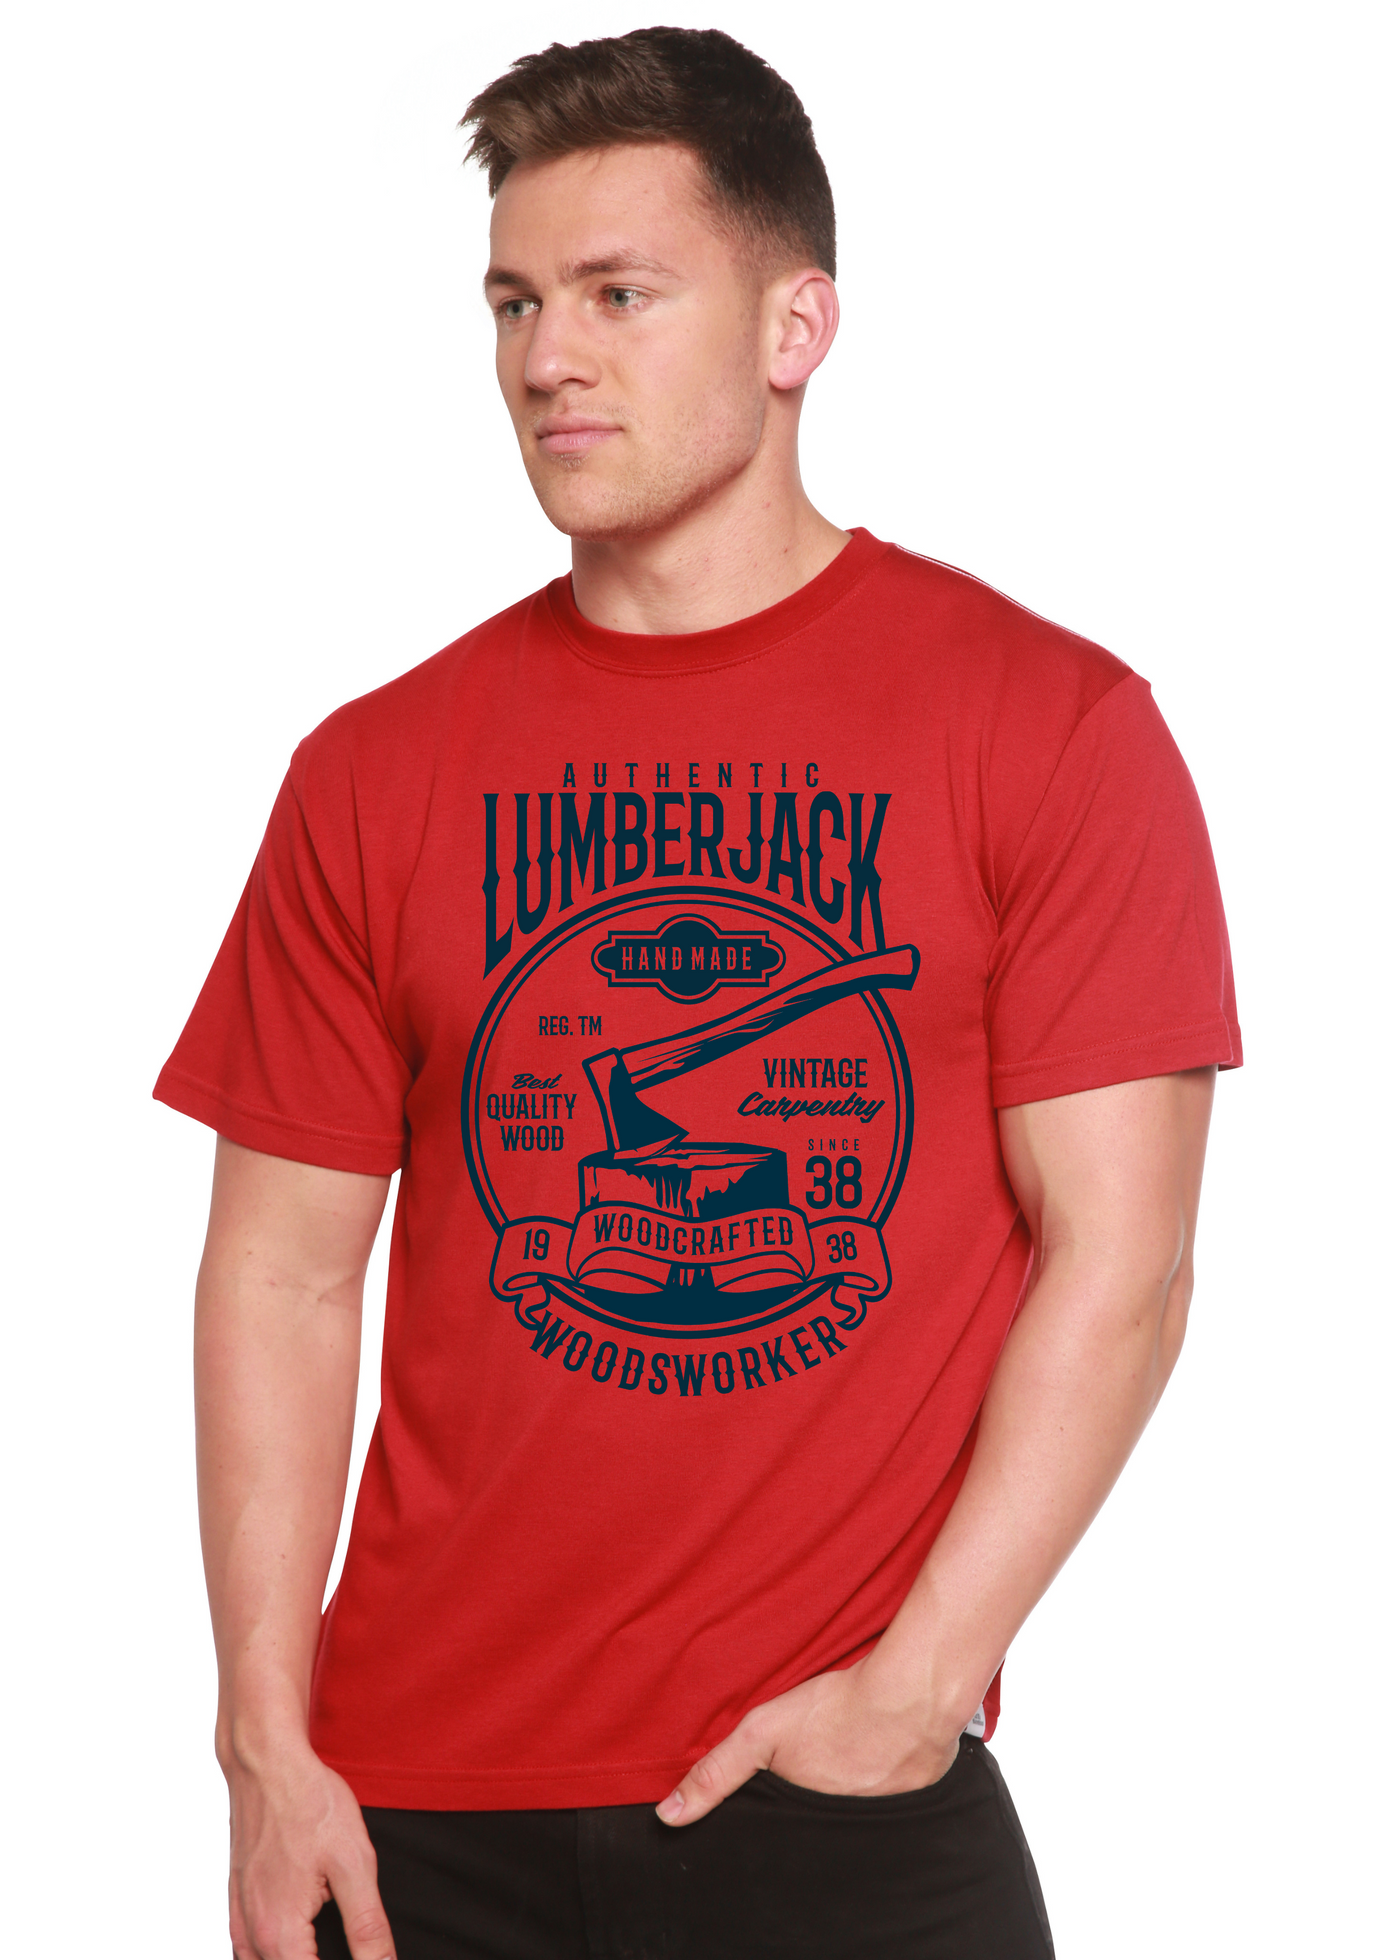 Authentic Lumberjack men's bamboo tshirt pompeian red